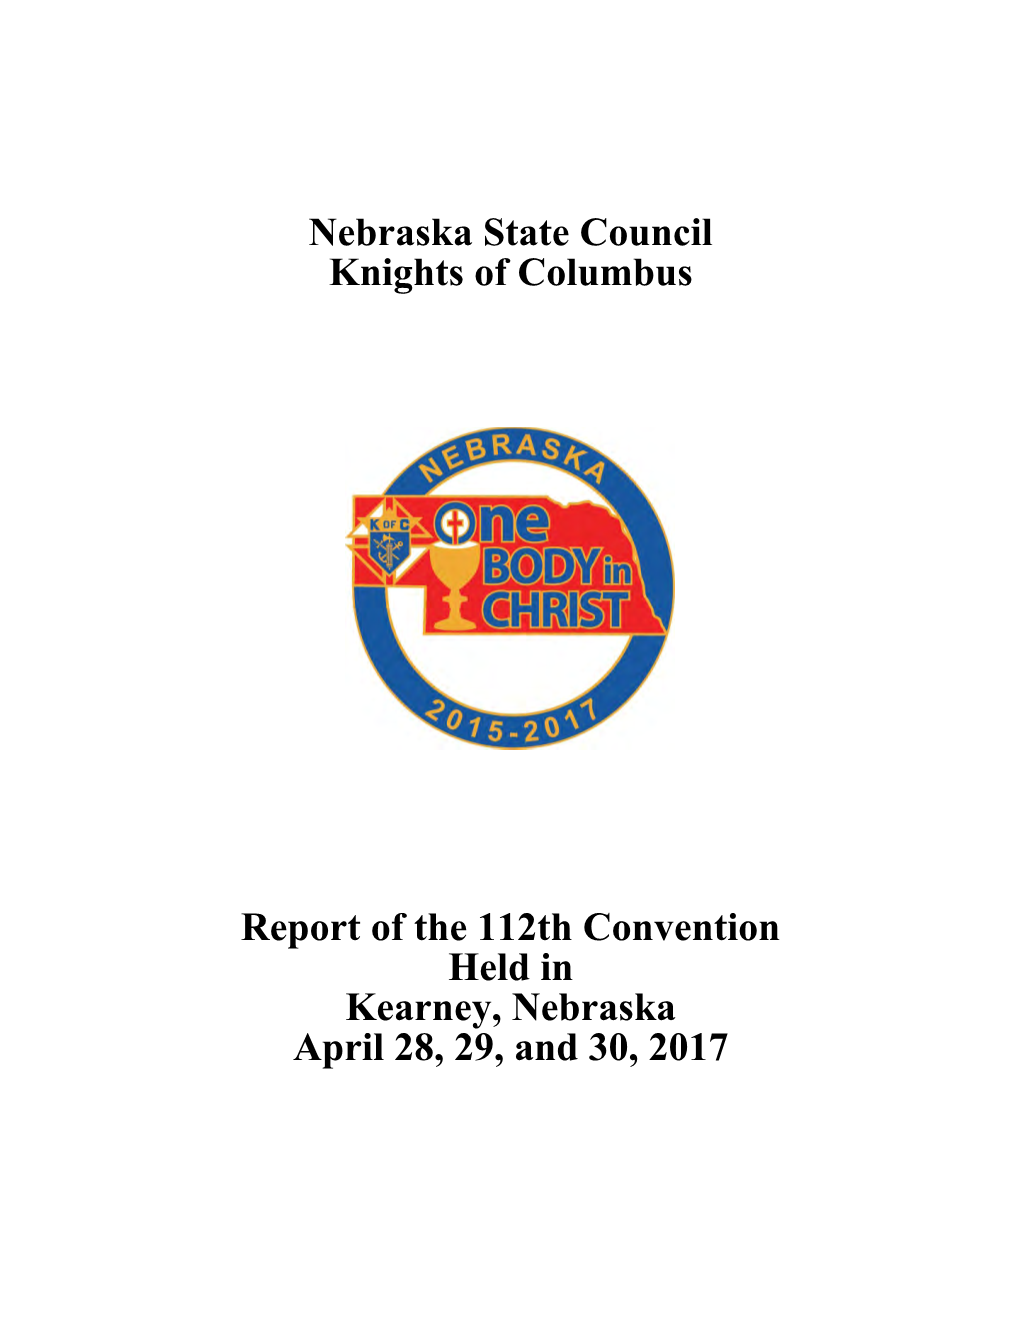 Nebraska State Council Knights of Columbus